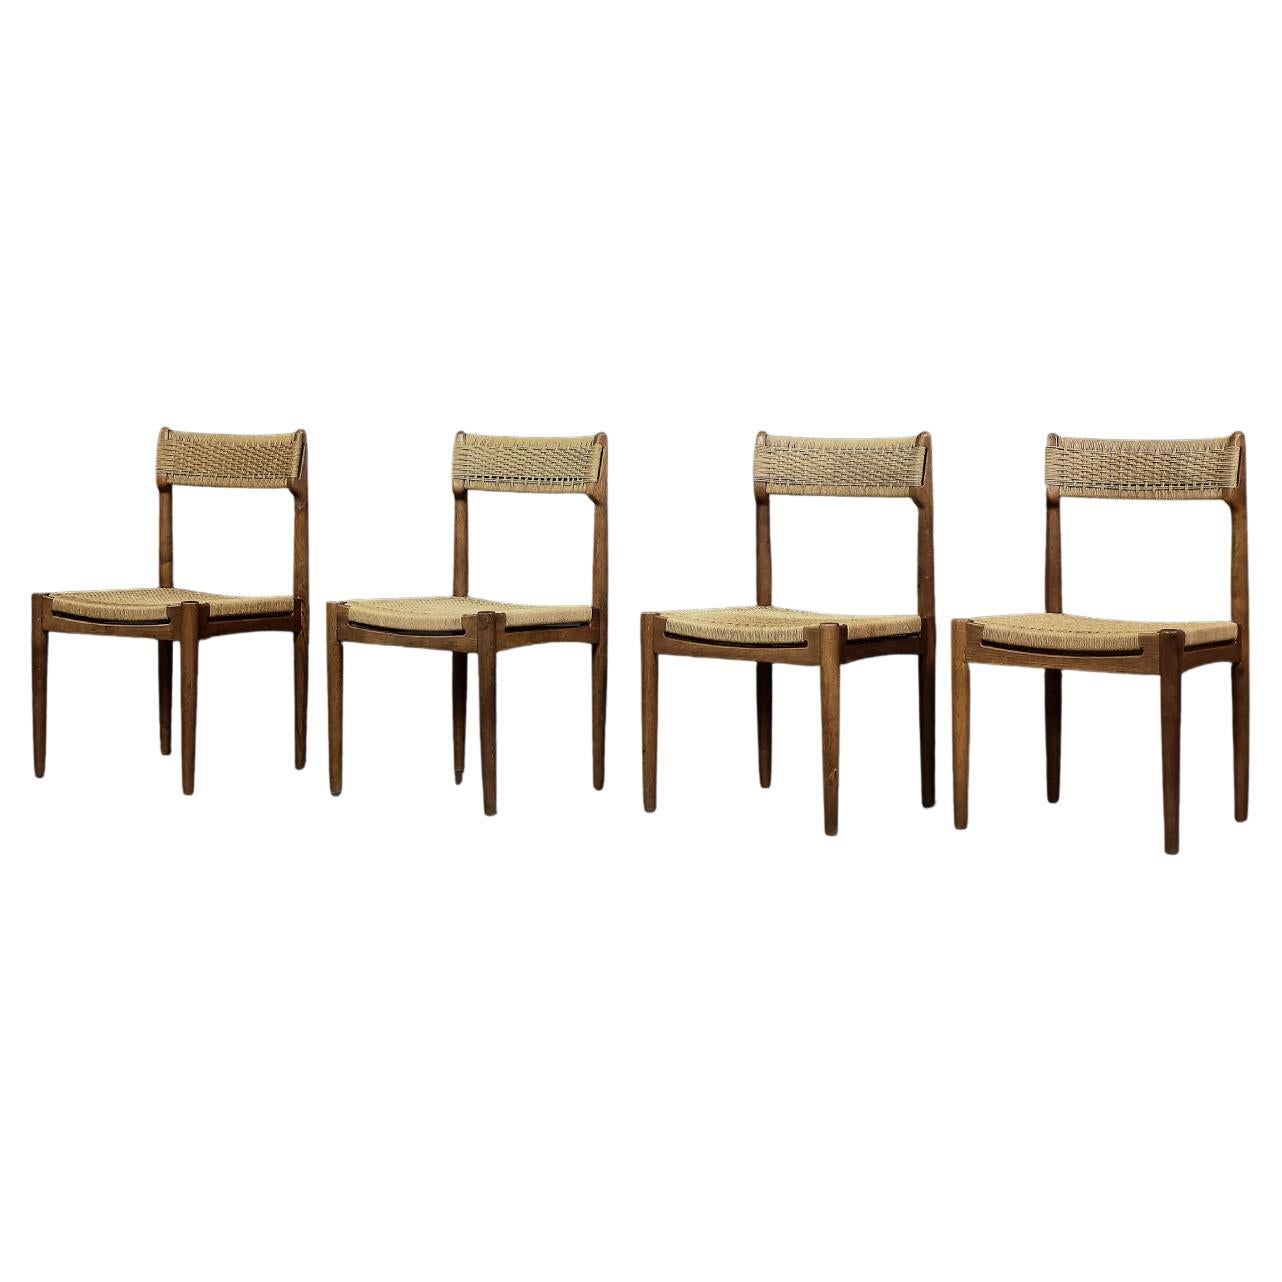 Set of 4 Vintage Mid-Century Modern Scandinavian Dining Chairs in Oak&Paper Cord